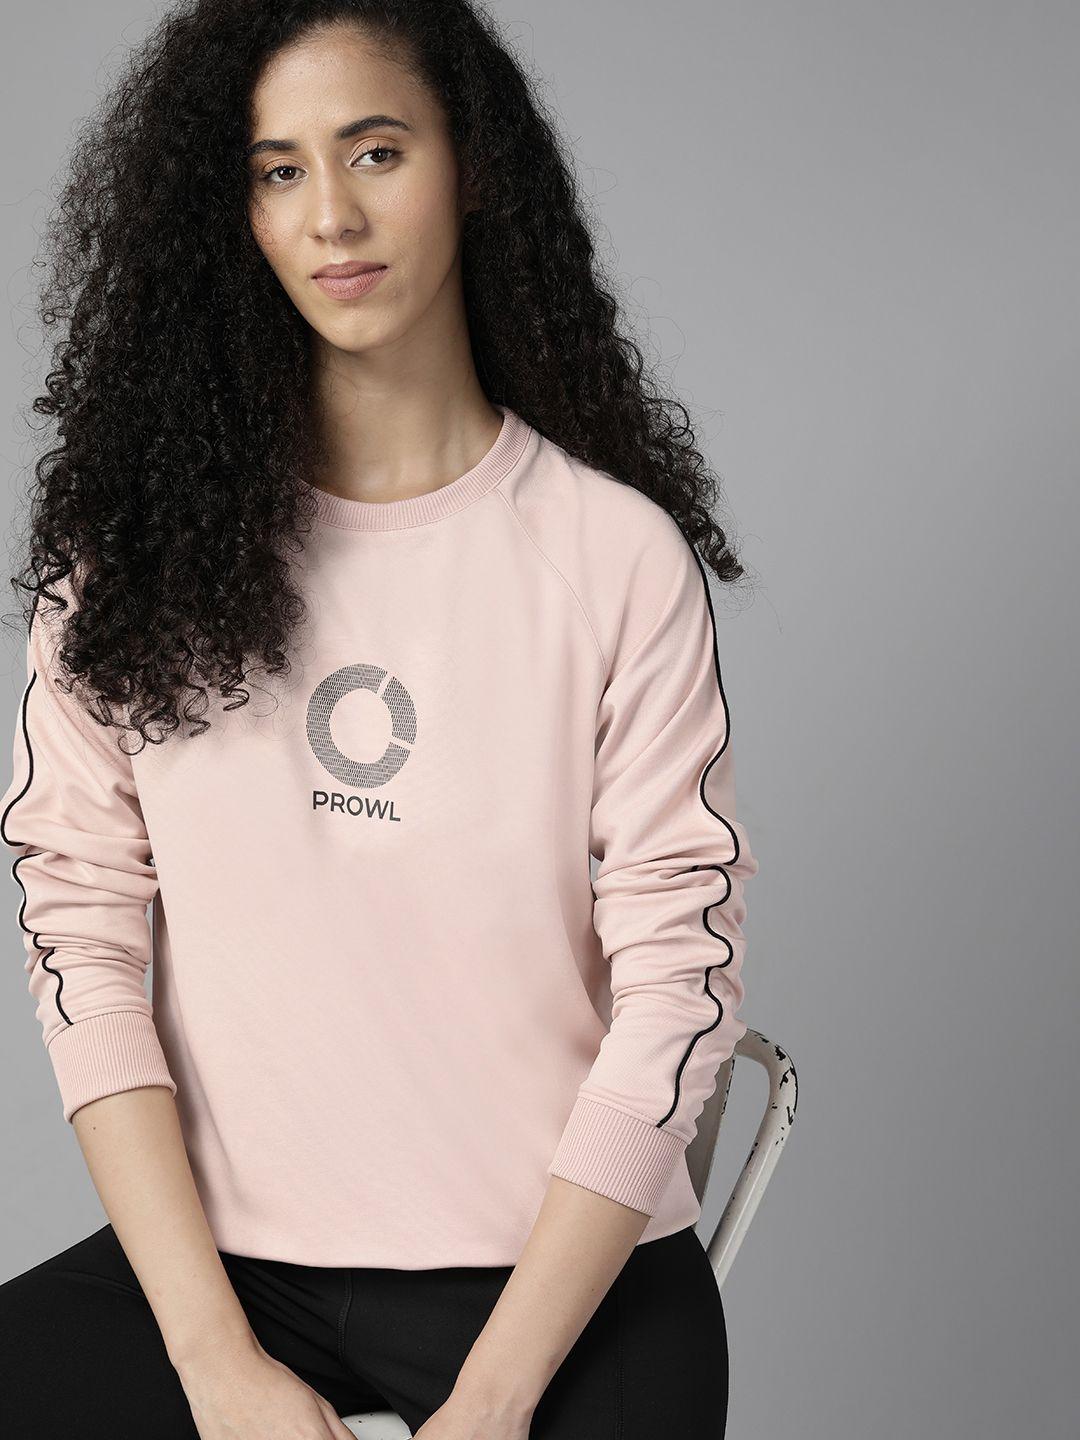 prowl by tiger shroff women pink & black brand logo printed sweatshirt